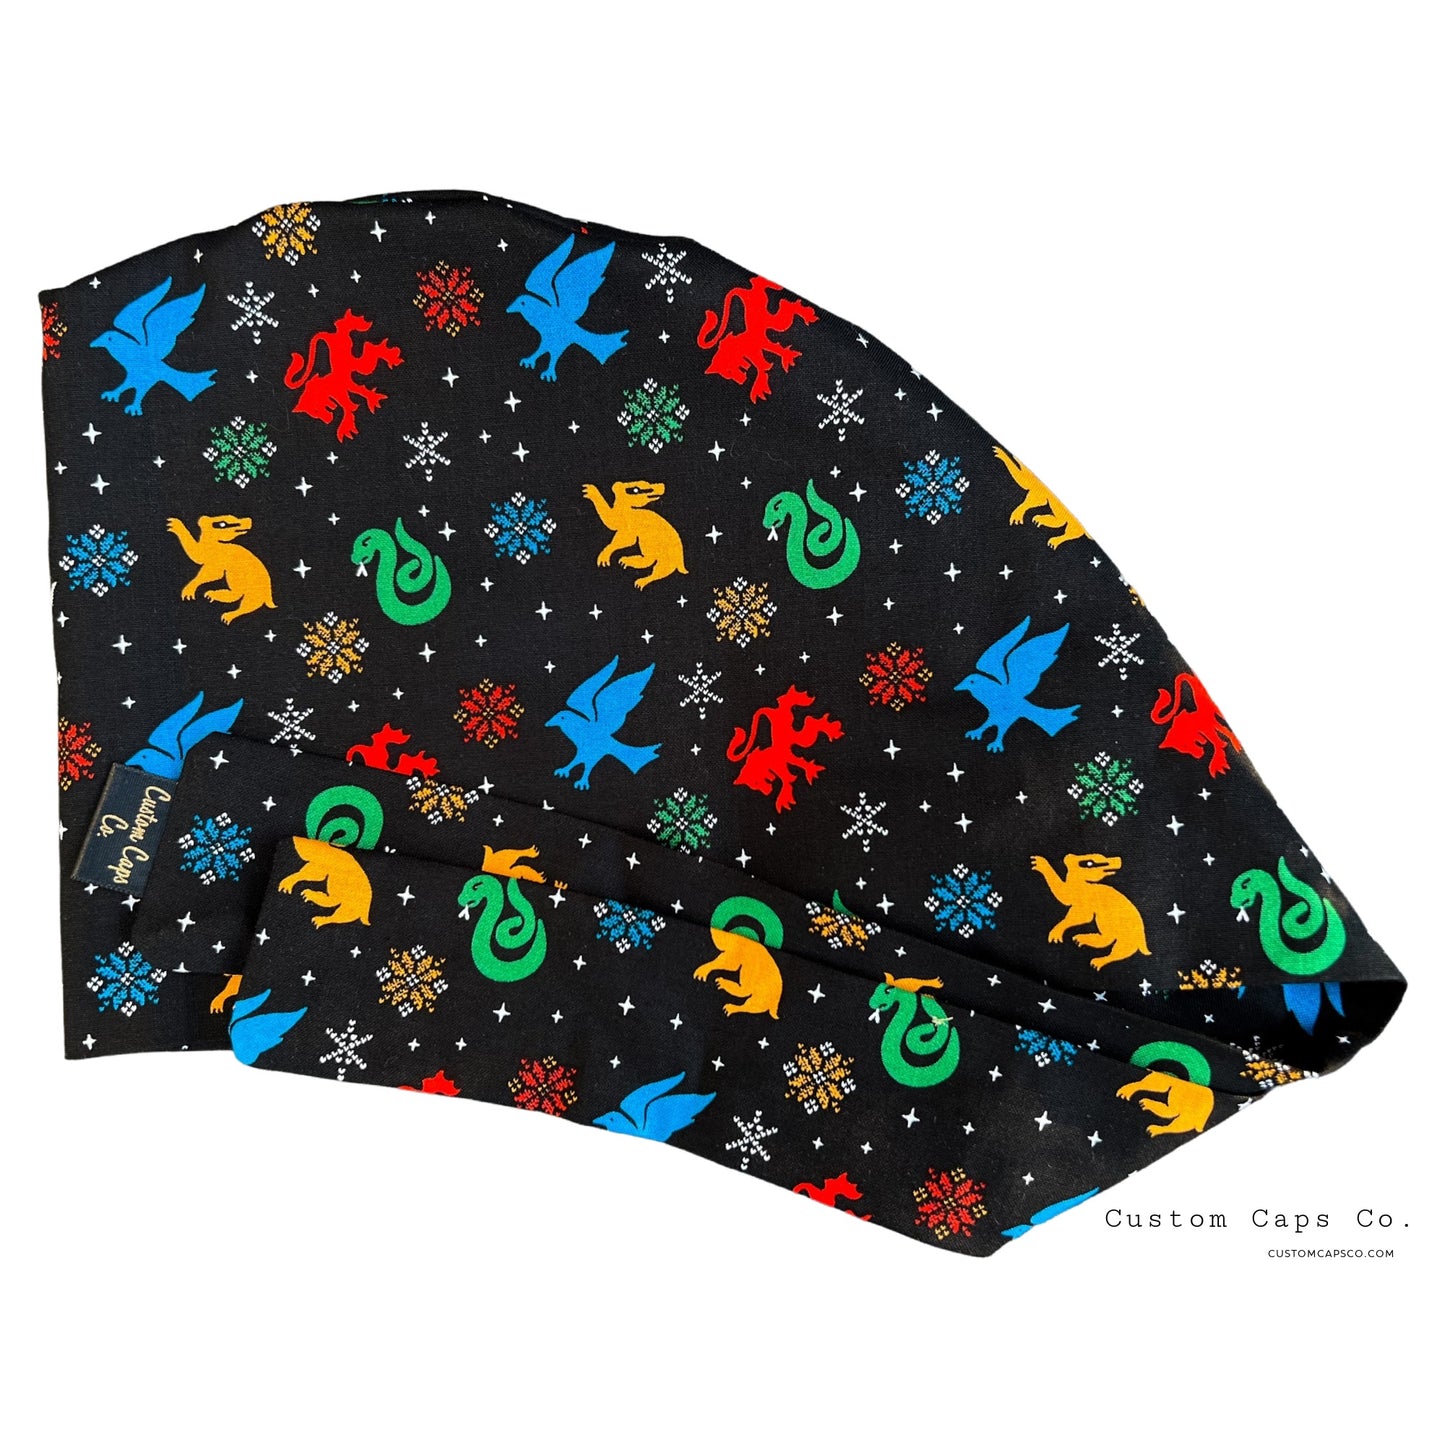 Wizarding Jumper Knit | Pixie - Custom Caps Co. 